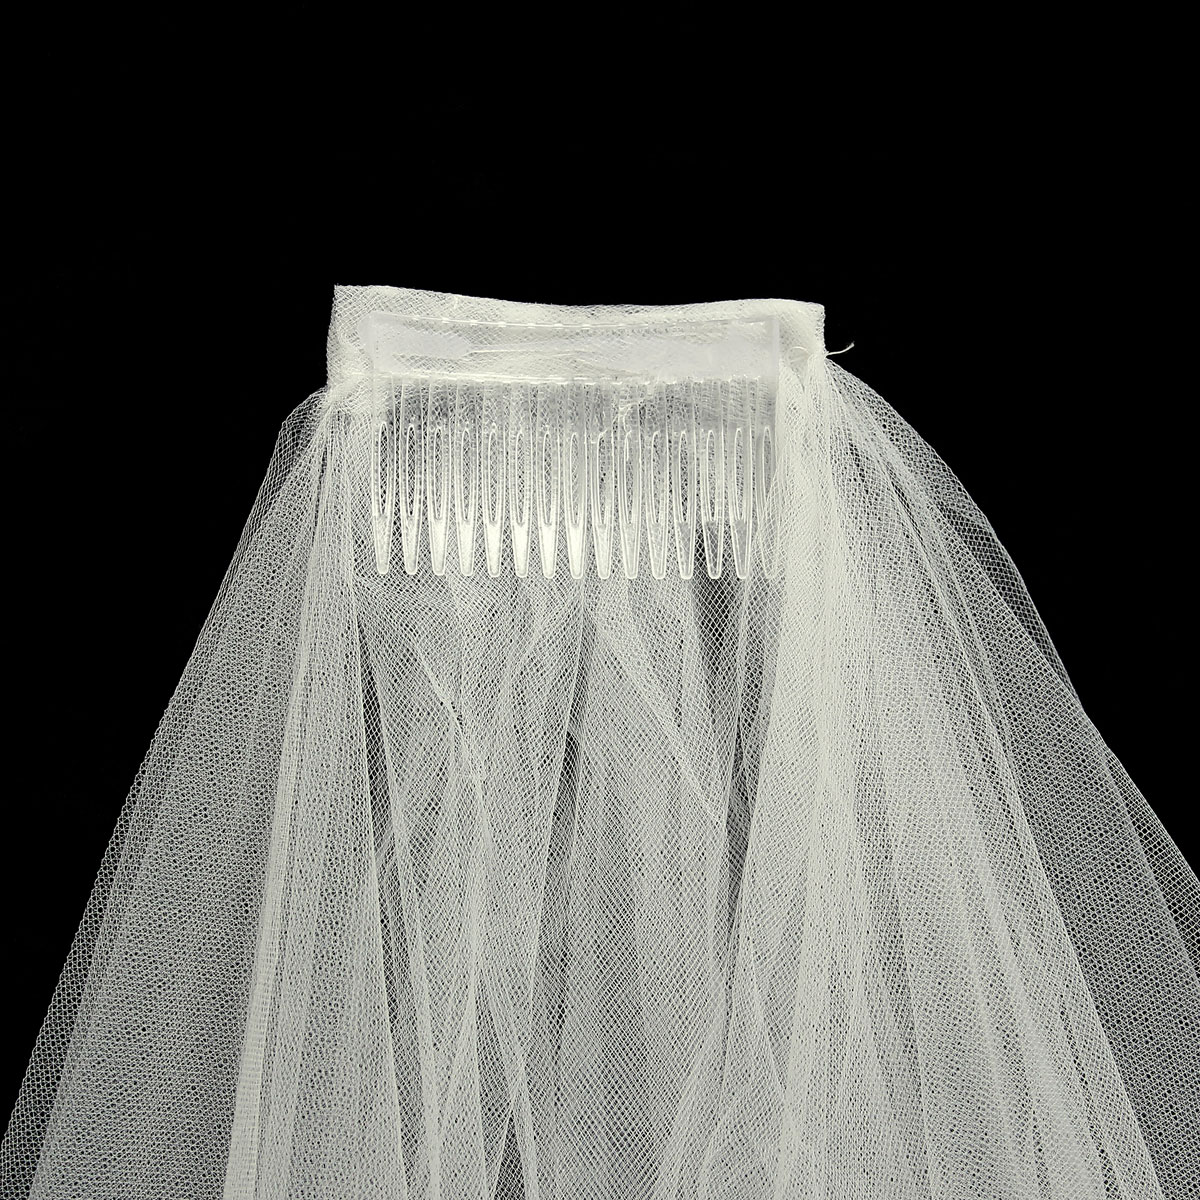 Bride-2-Layers-Lace-Sequin-Decorative-Edge-Bridal-Wedding-Elbow-Veil-With-Comb-1085026